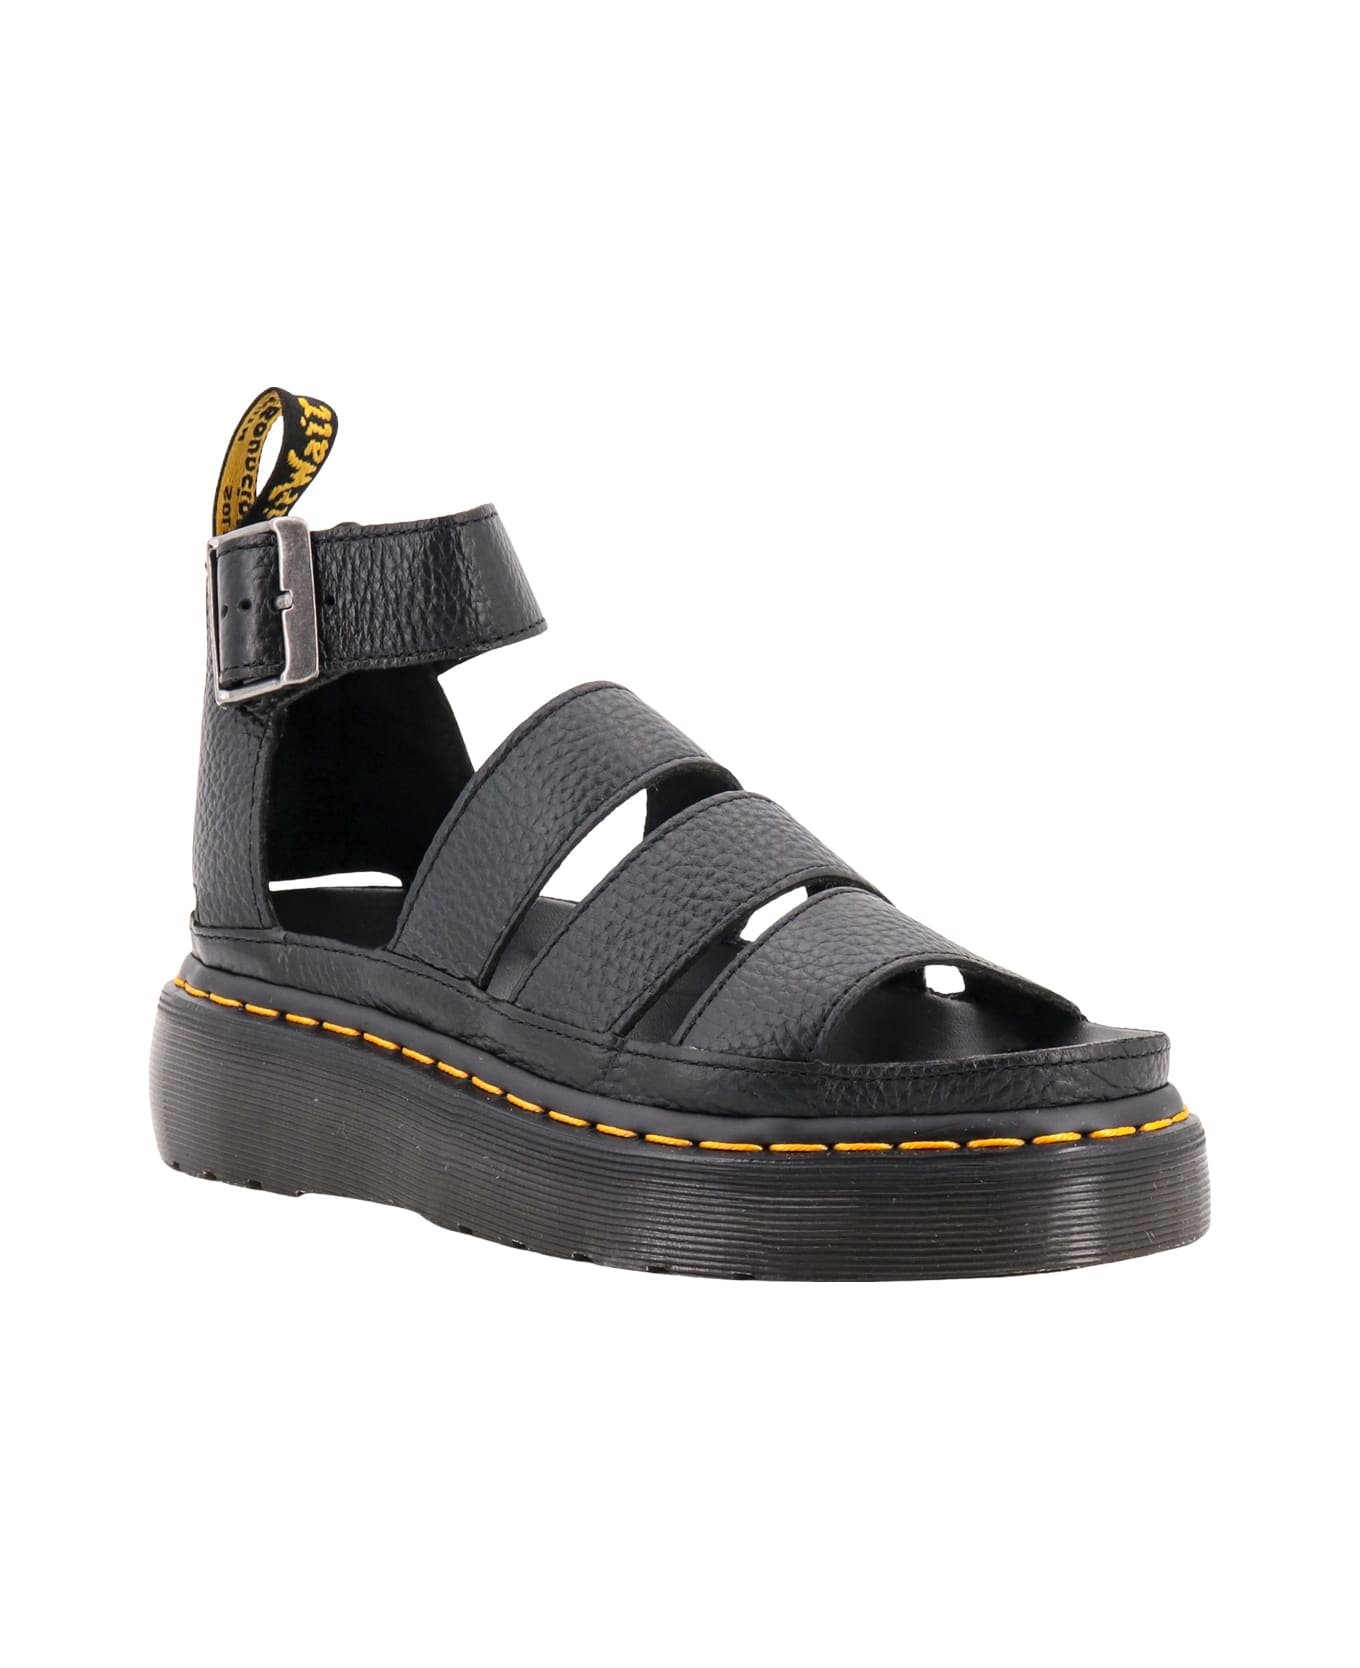 Dr. Martens Clarissa Ii Quad Leather Platform Sandals - Black